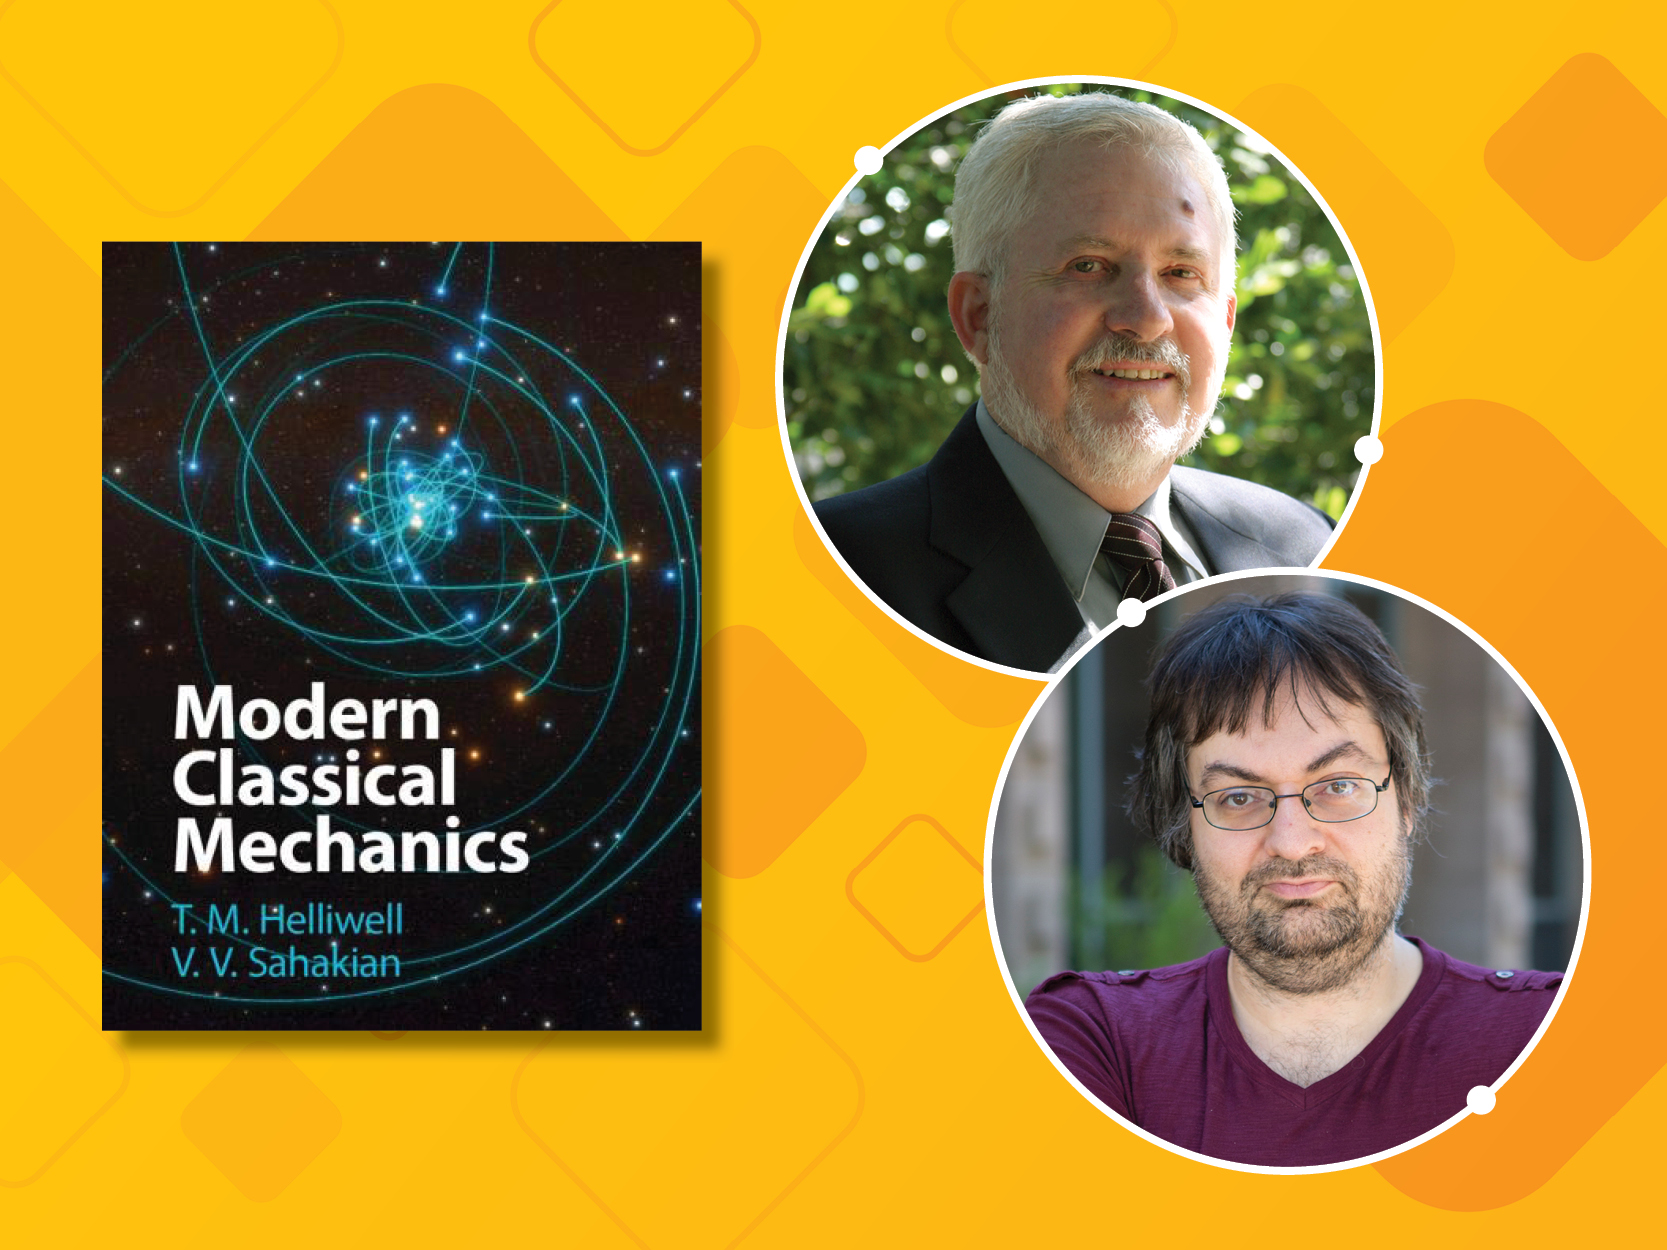 Modern Classical Mechanics by Thomas Helliwell and Vatche Sahakian